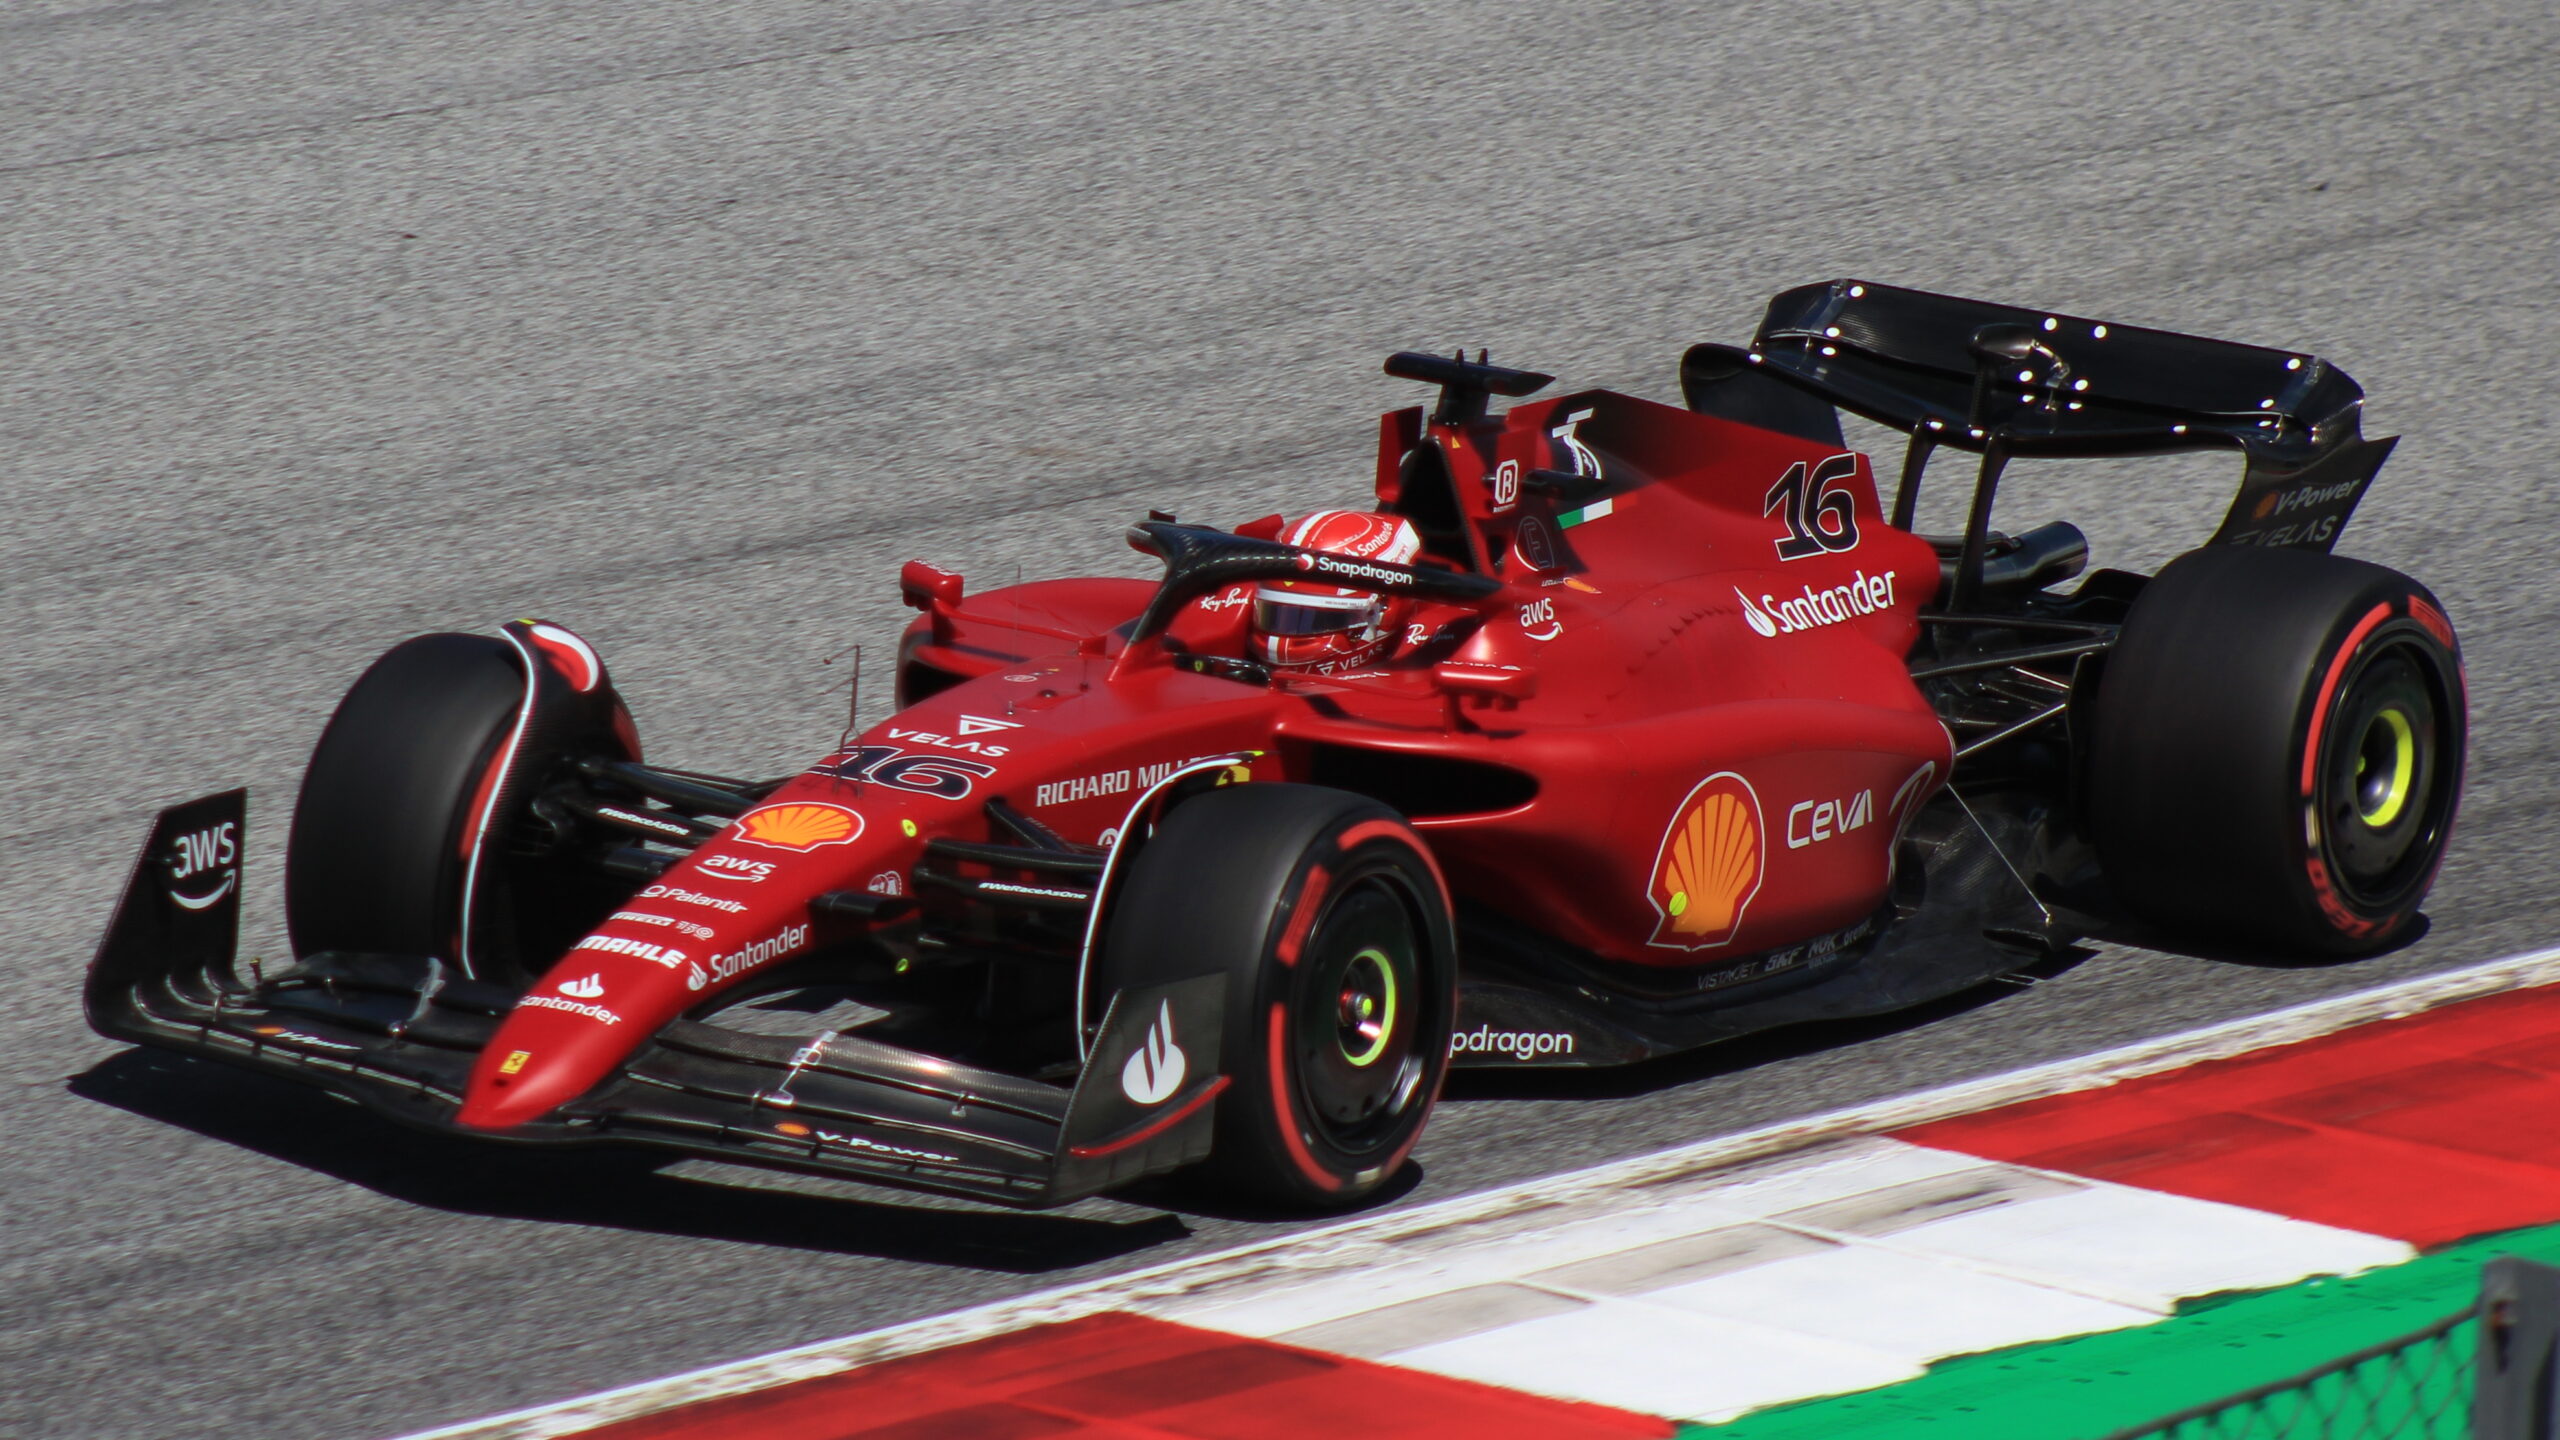 The 2022 Ferrari Formula One Car